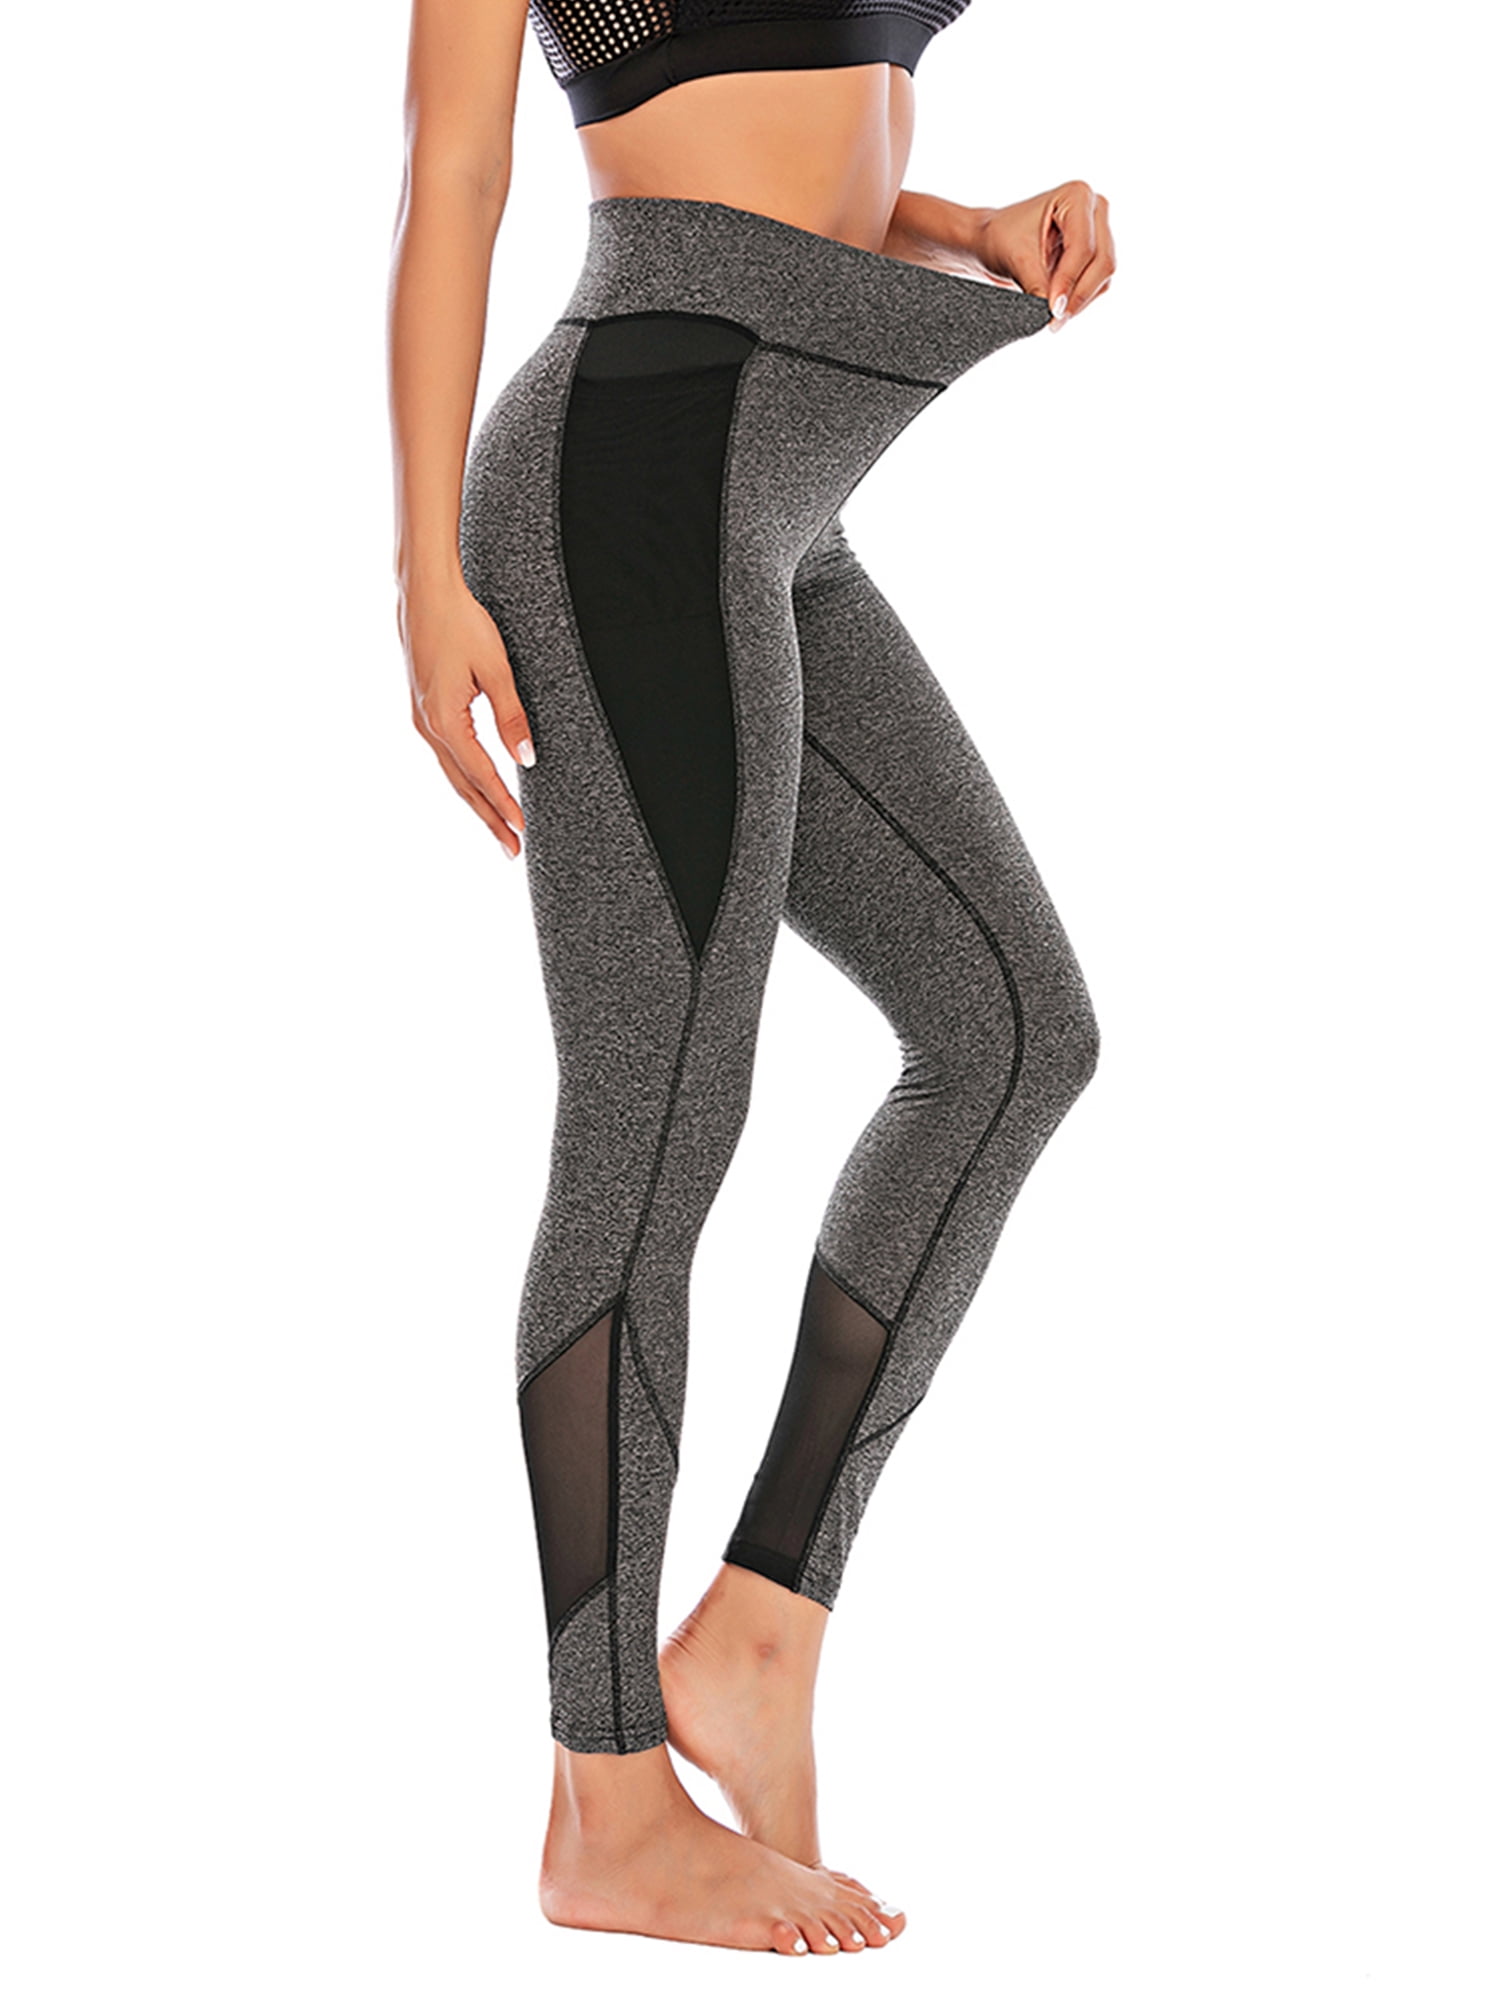 Pocket Yoga Pants High Waist Mesh Women Yoga Leggins Training